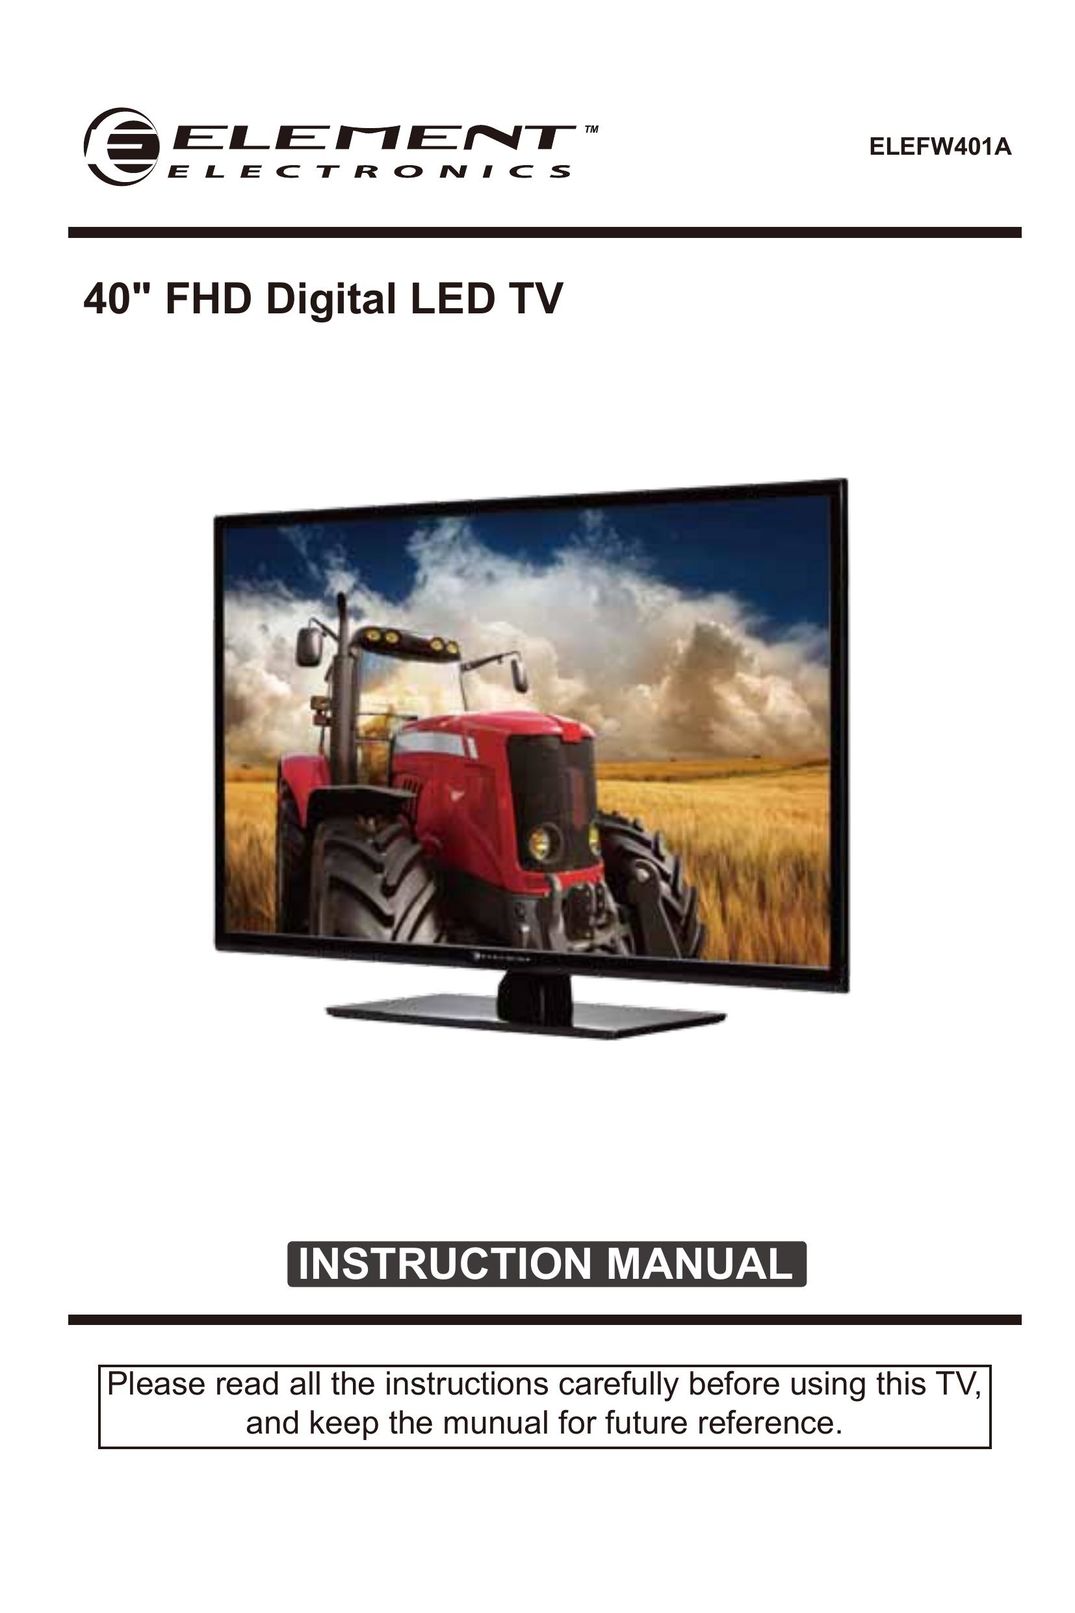 Element Electronics elefw401a Flat Panel Television User Manual